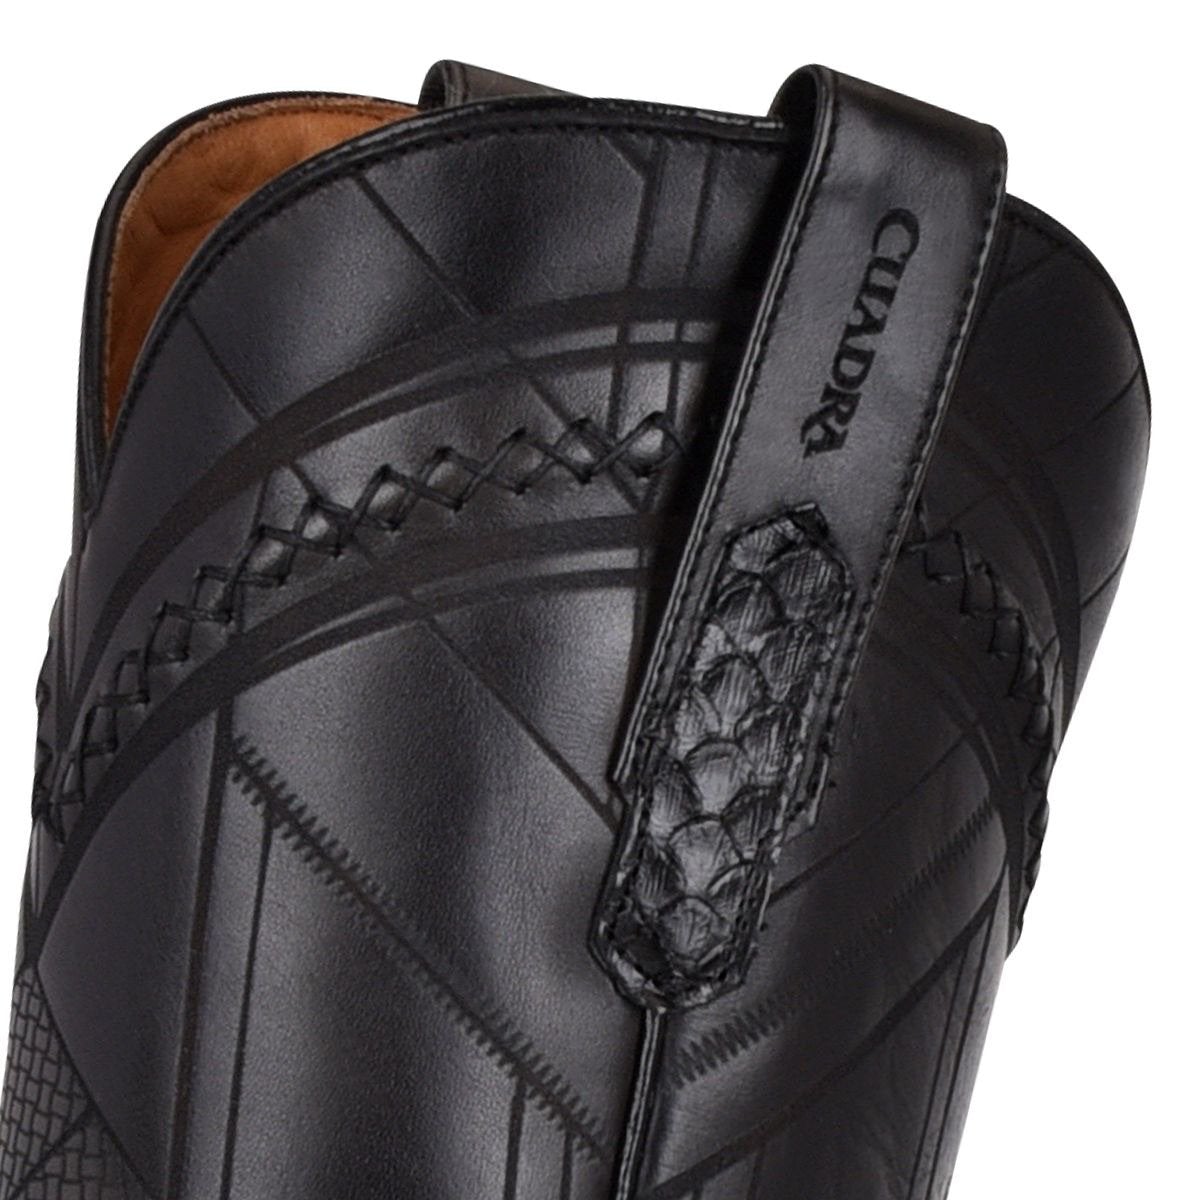 1J2FPH - Cuadra black dress cowboy python leather boots for men-Kuet.us